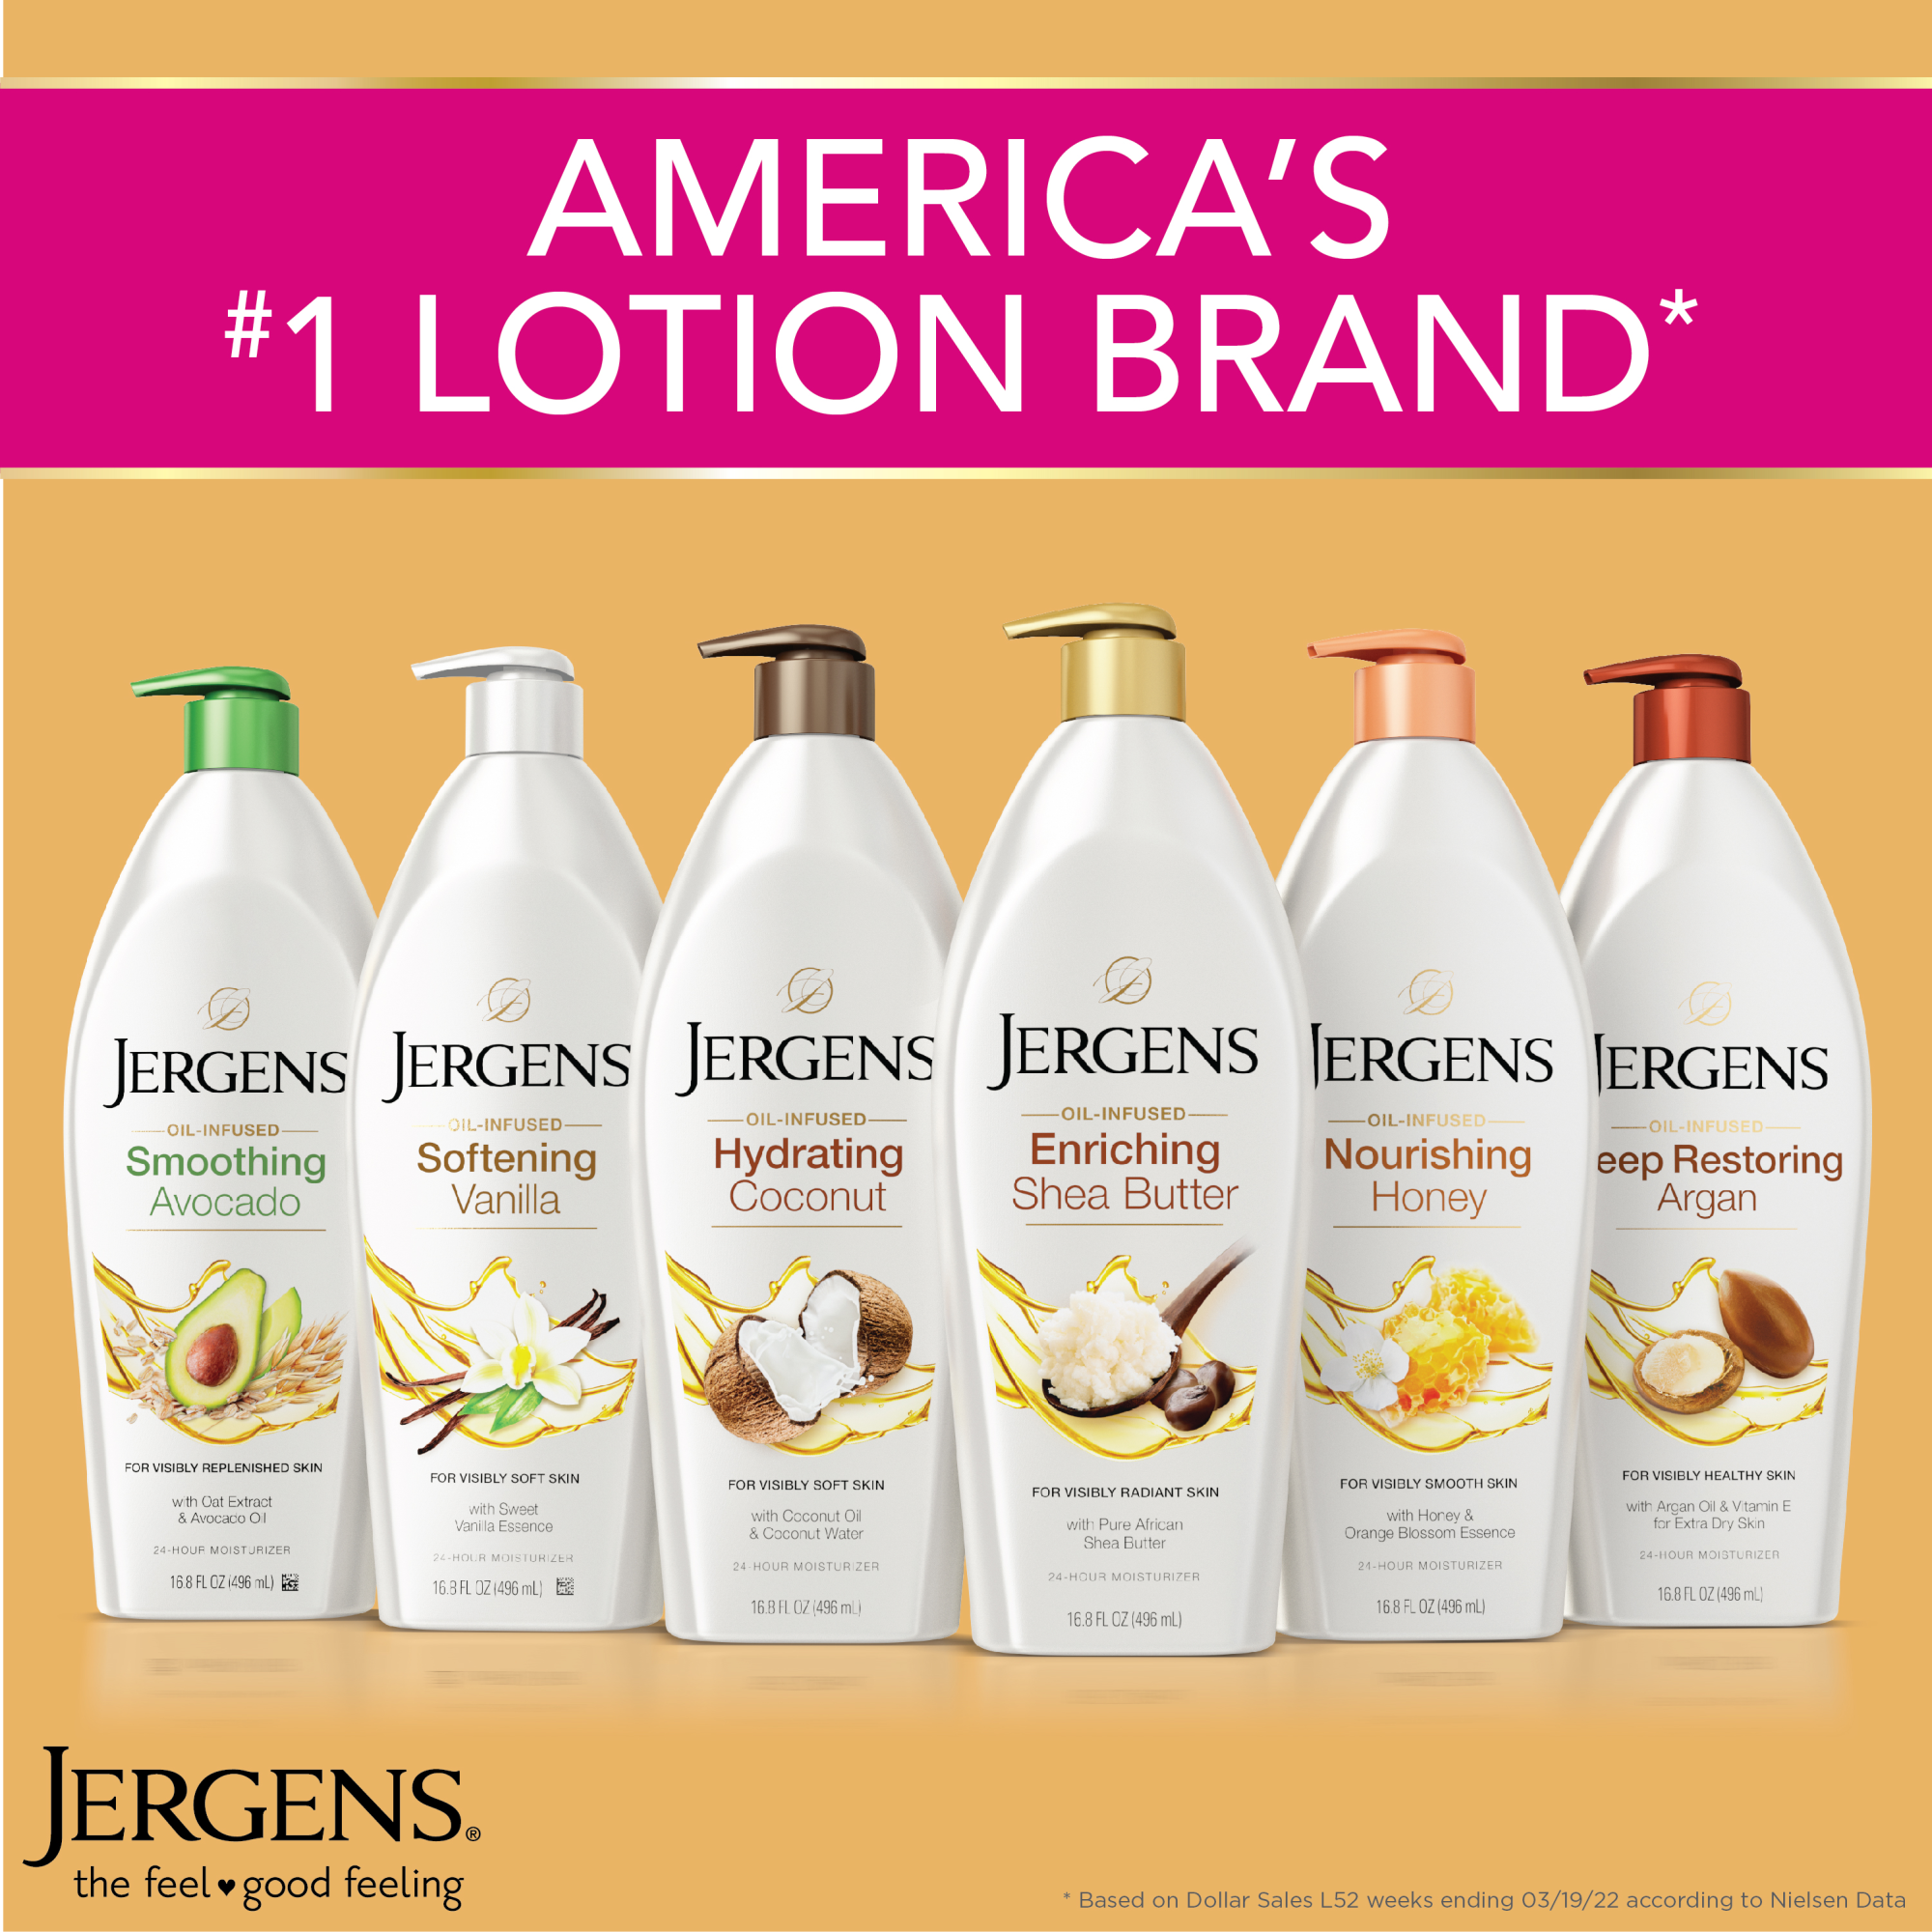 America's #1 lotion brand